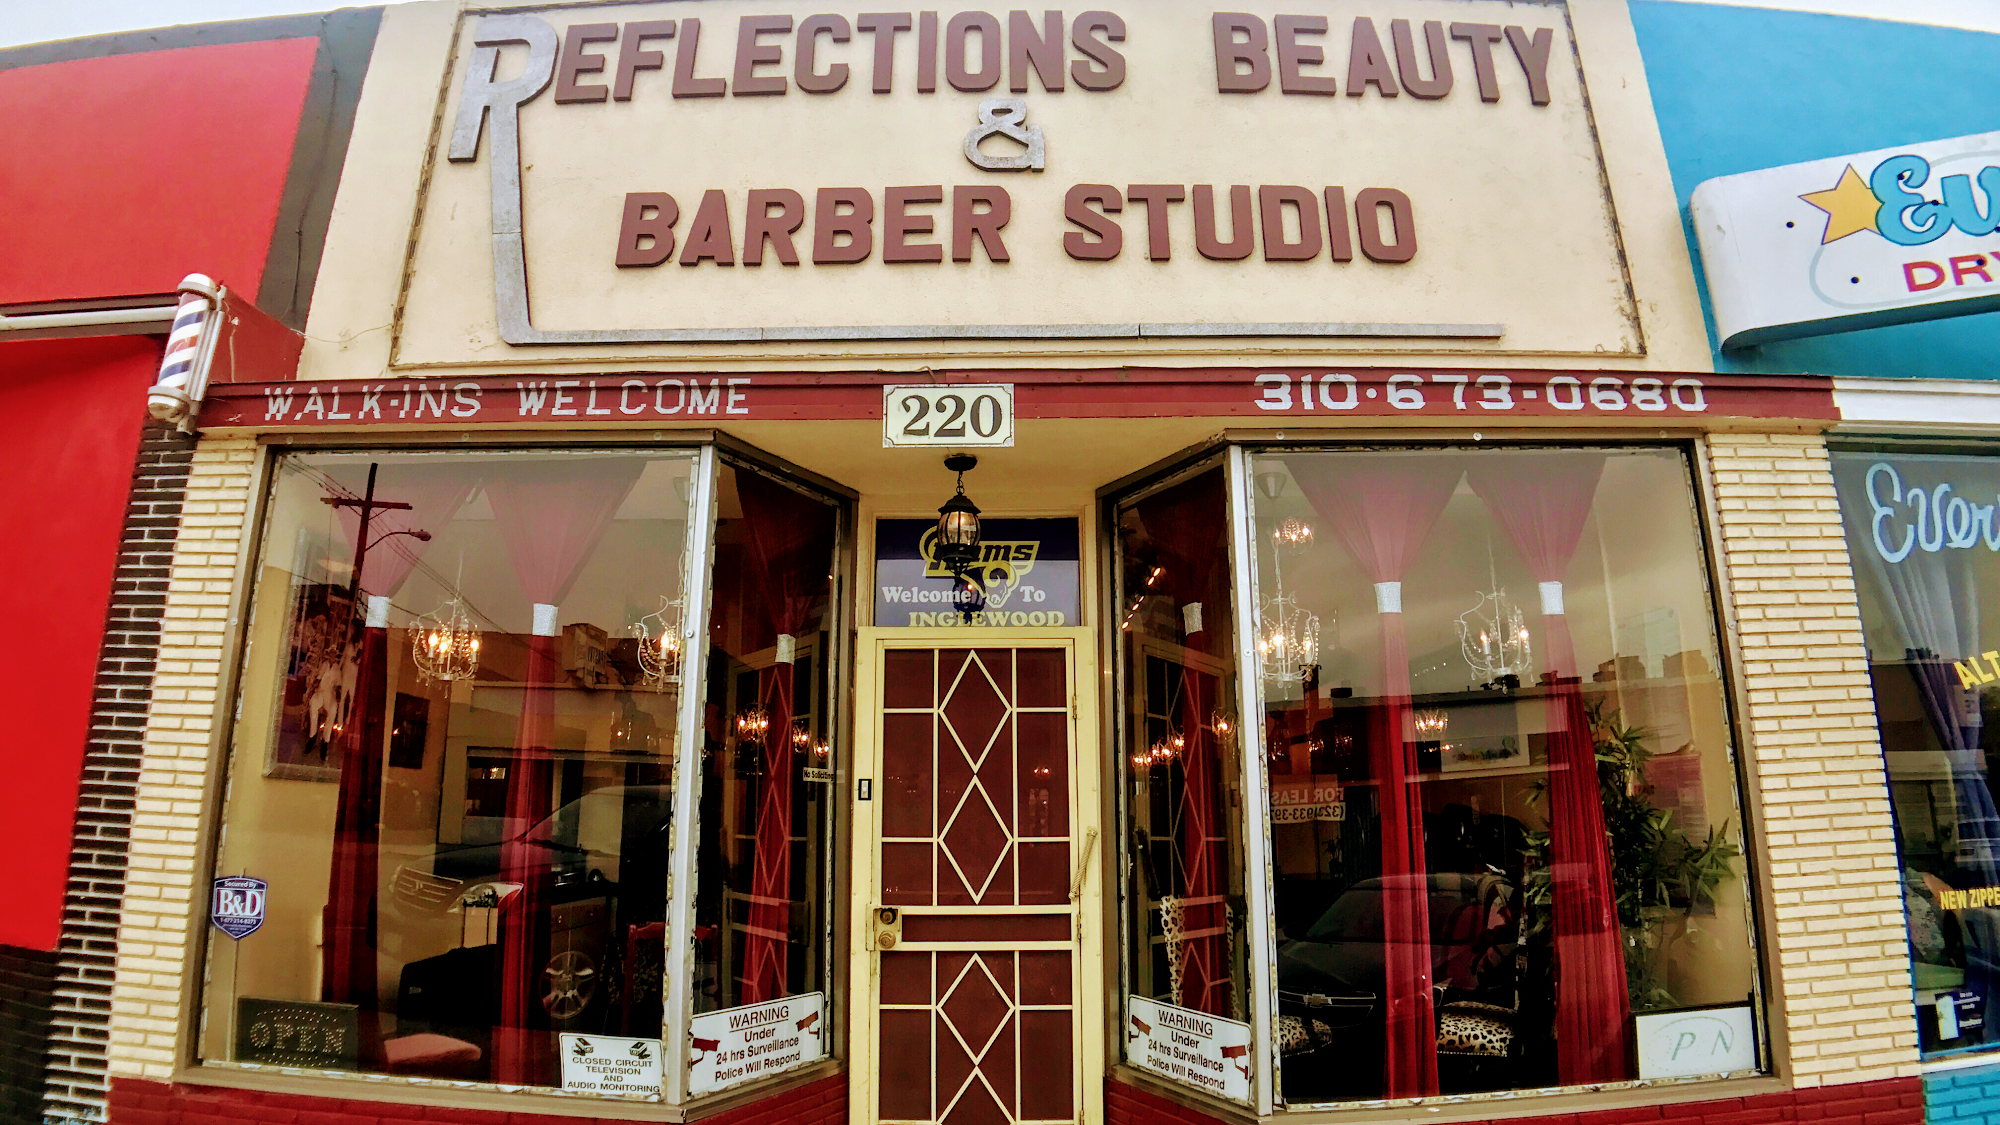 Reflections Beauty & Barber Studio